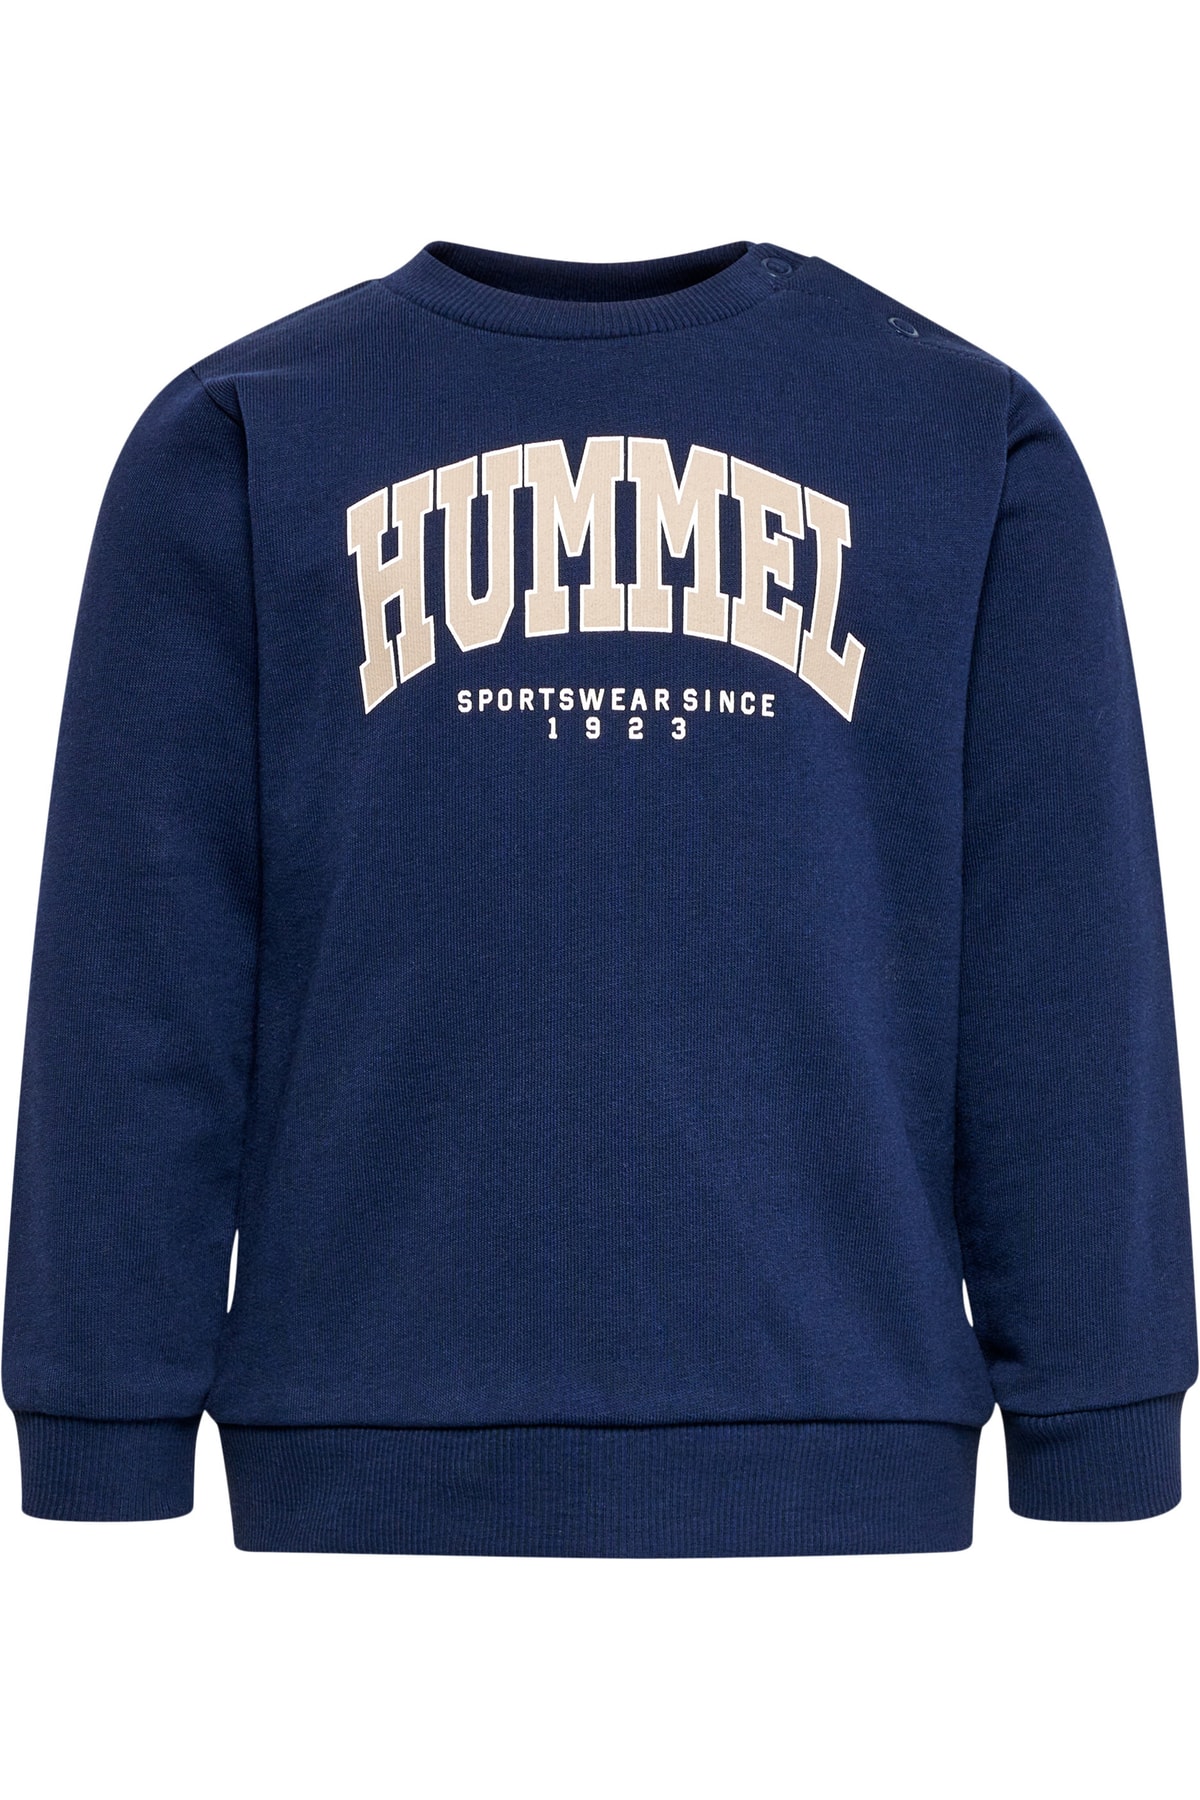 HUMMEL Sweatshirt Dunkelblau Regular Fit